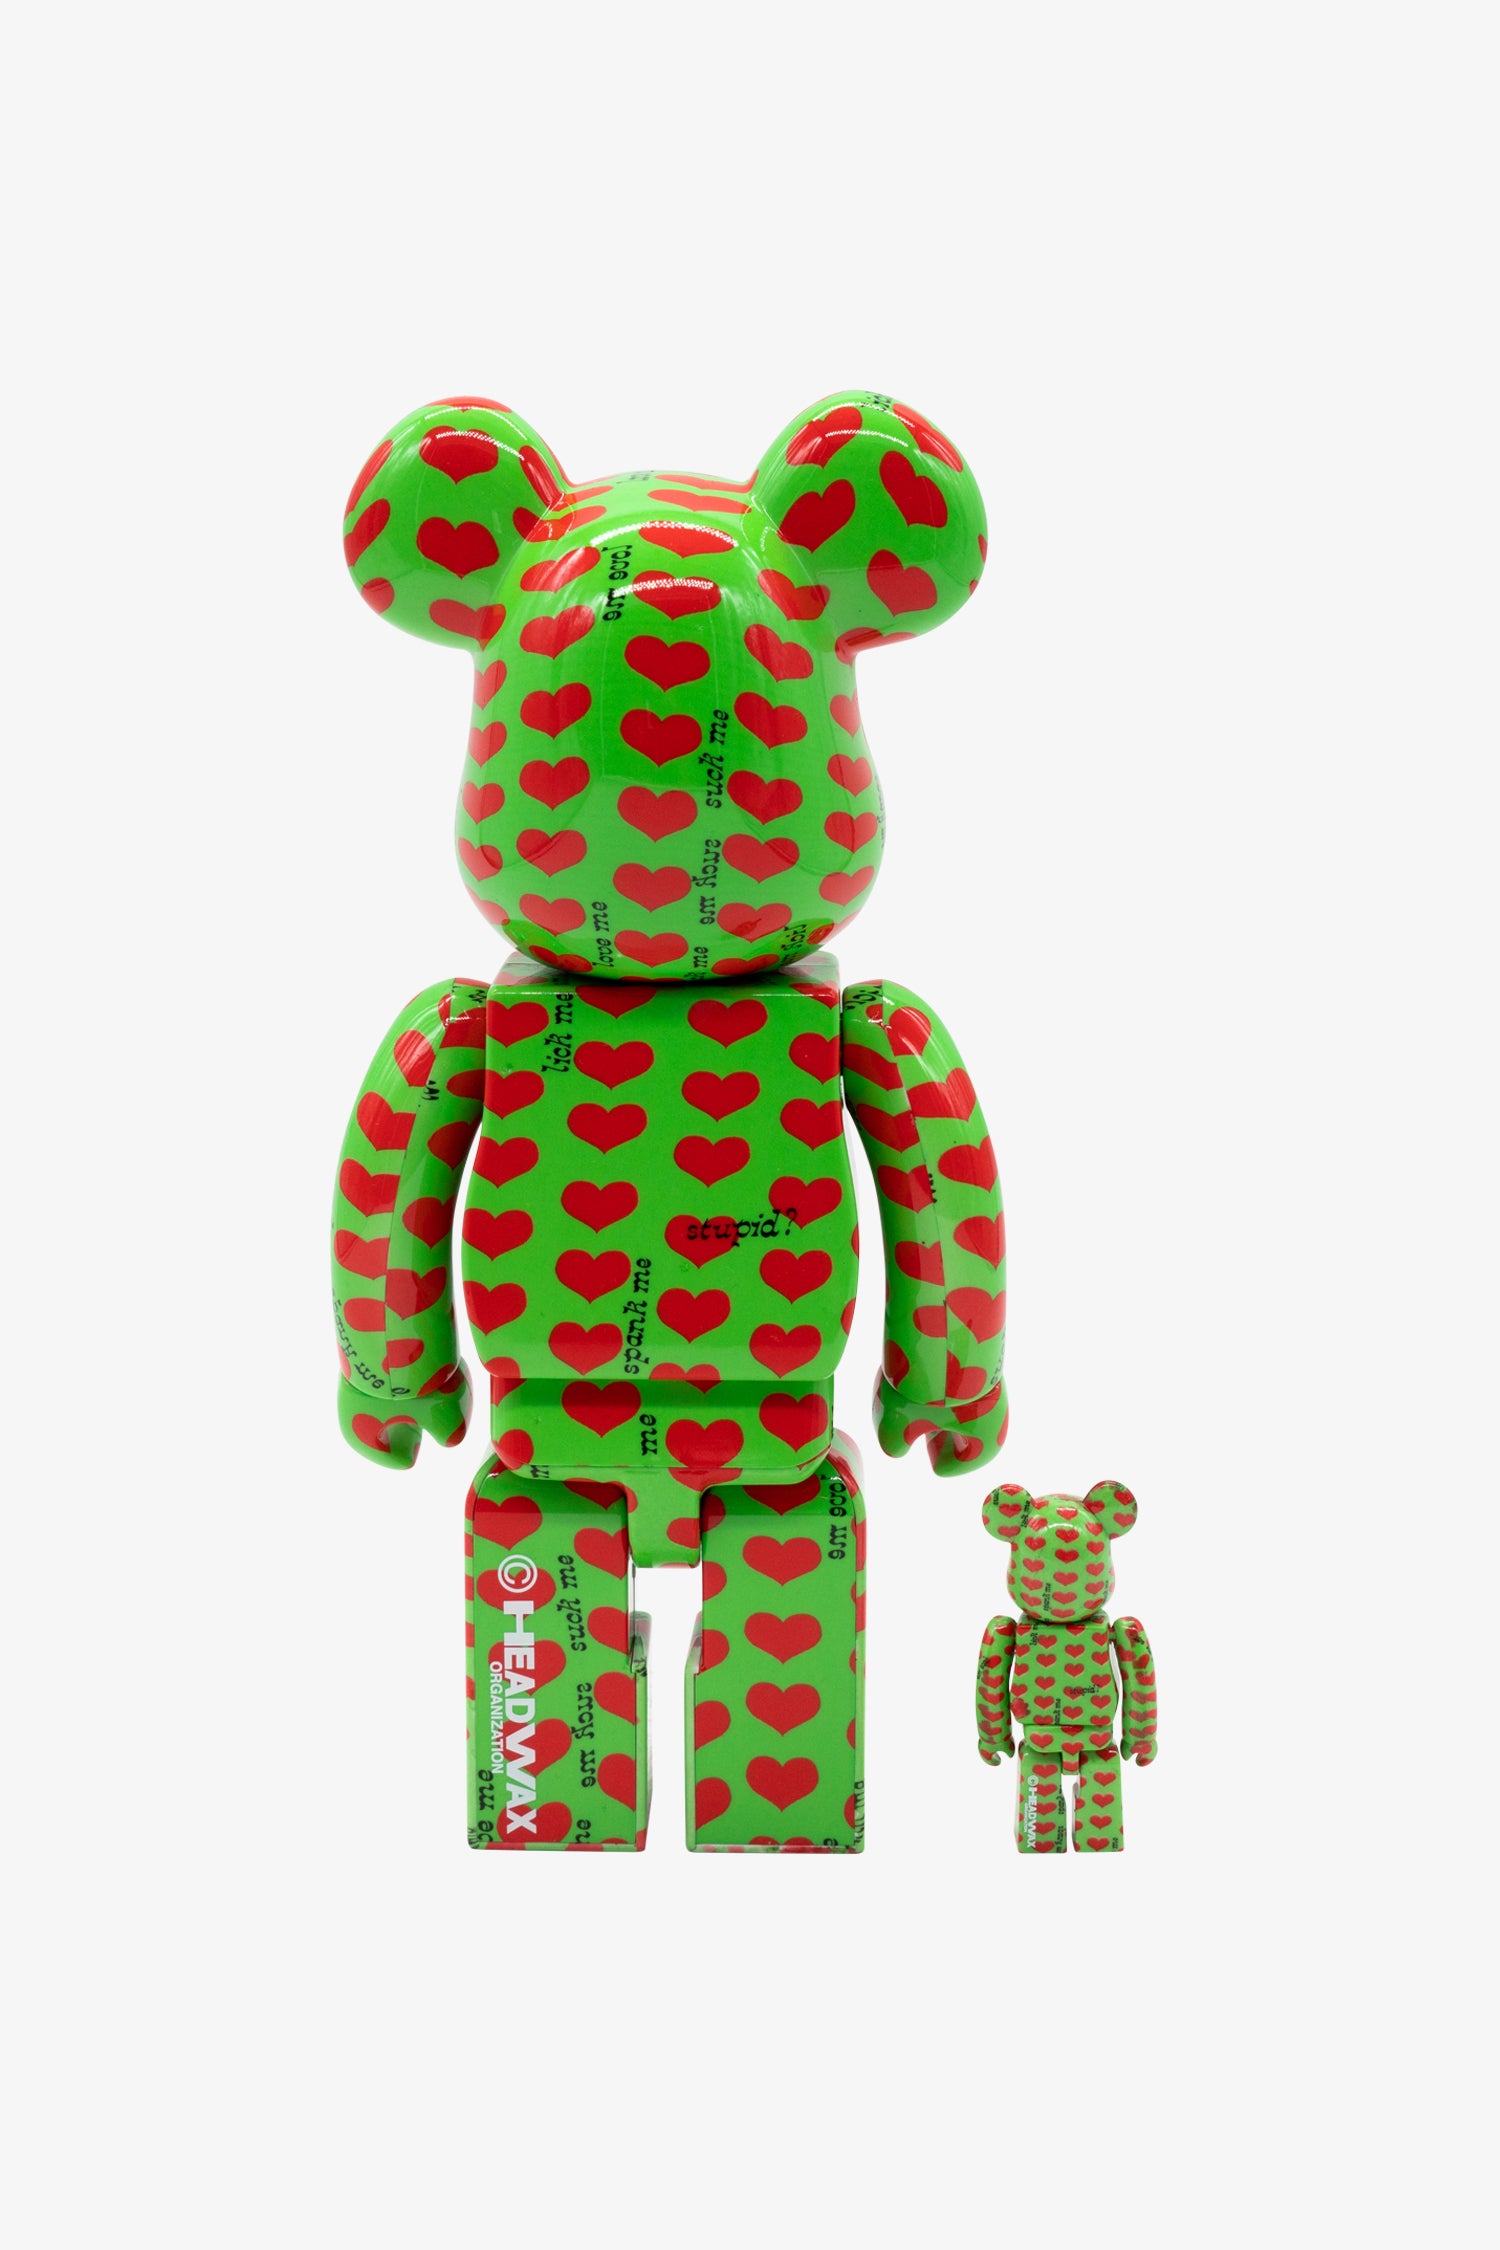 Selectshop FRAME - MEDICOM TOY Japan X Hide "Green Heart" Be@rbrick 400%+100% Toys Dubai